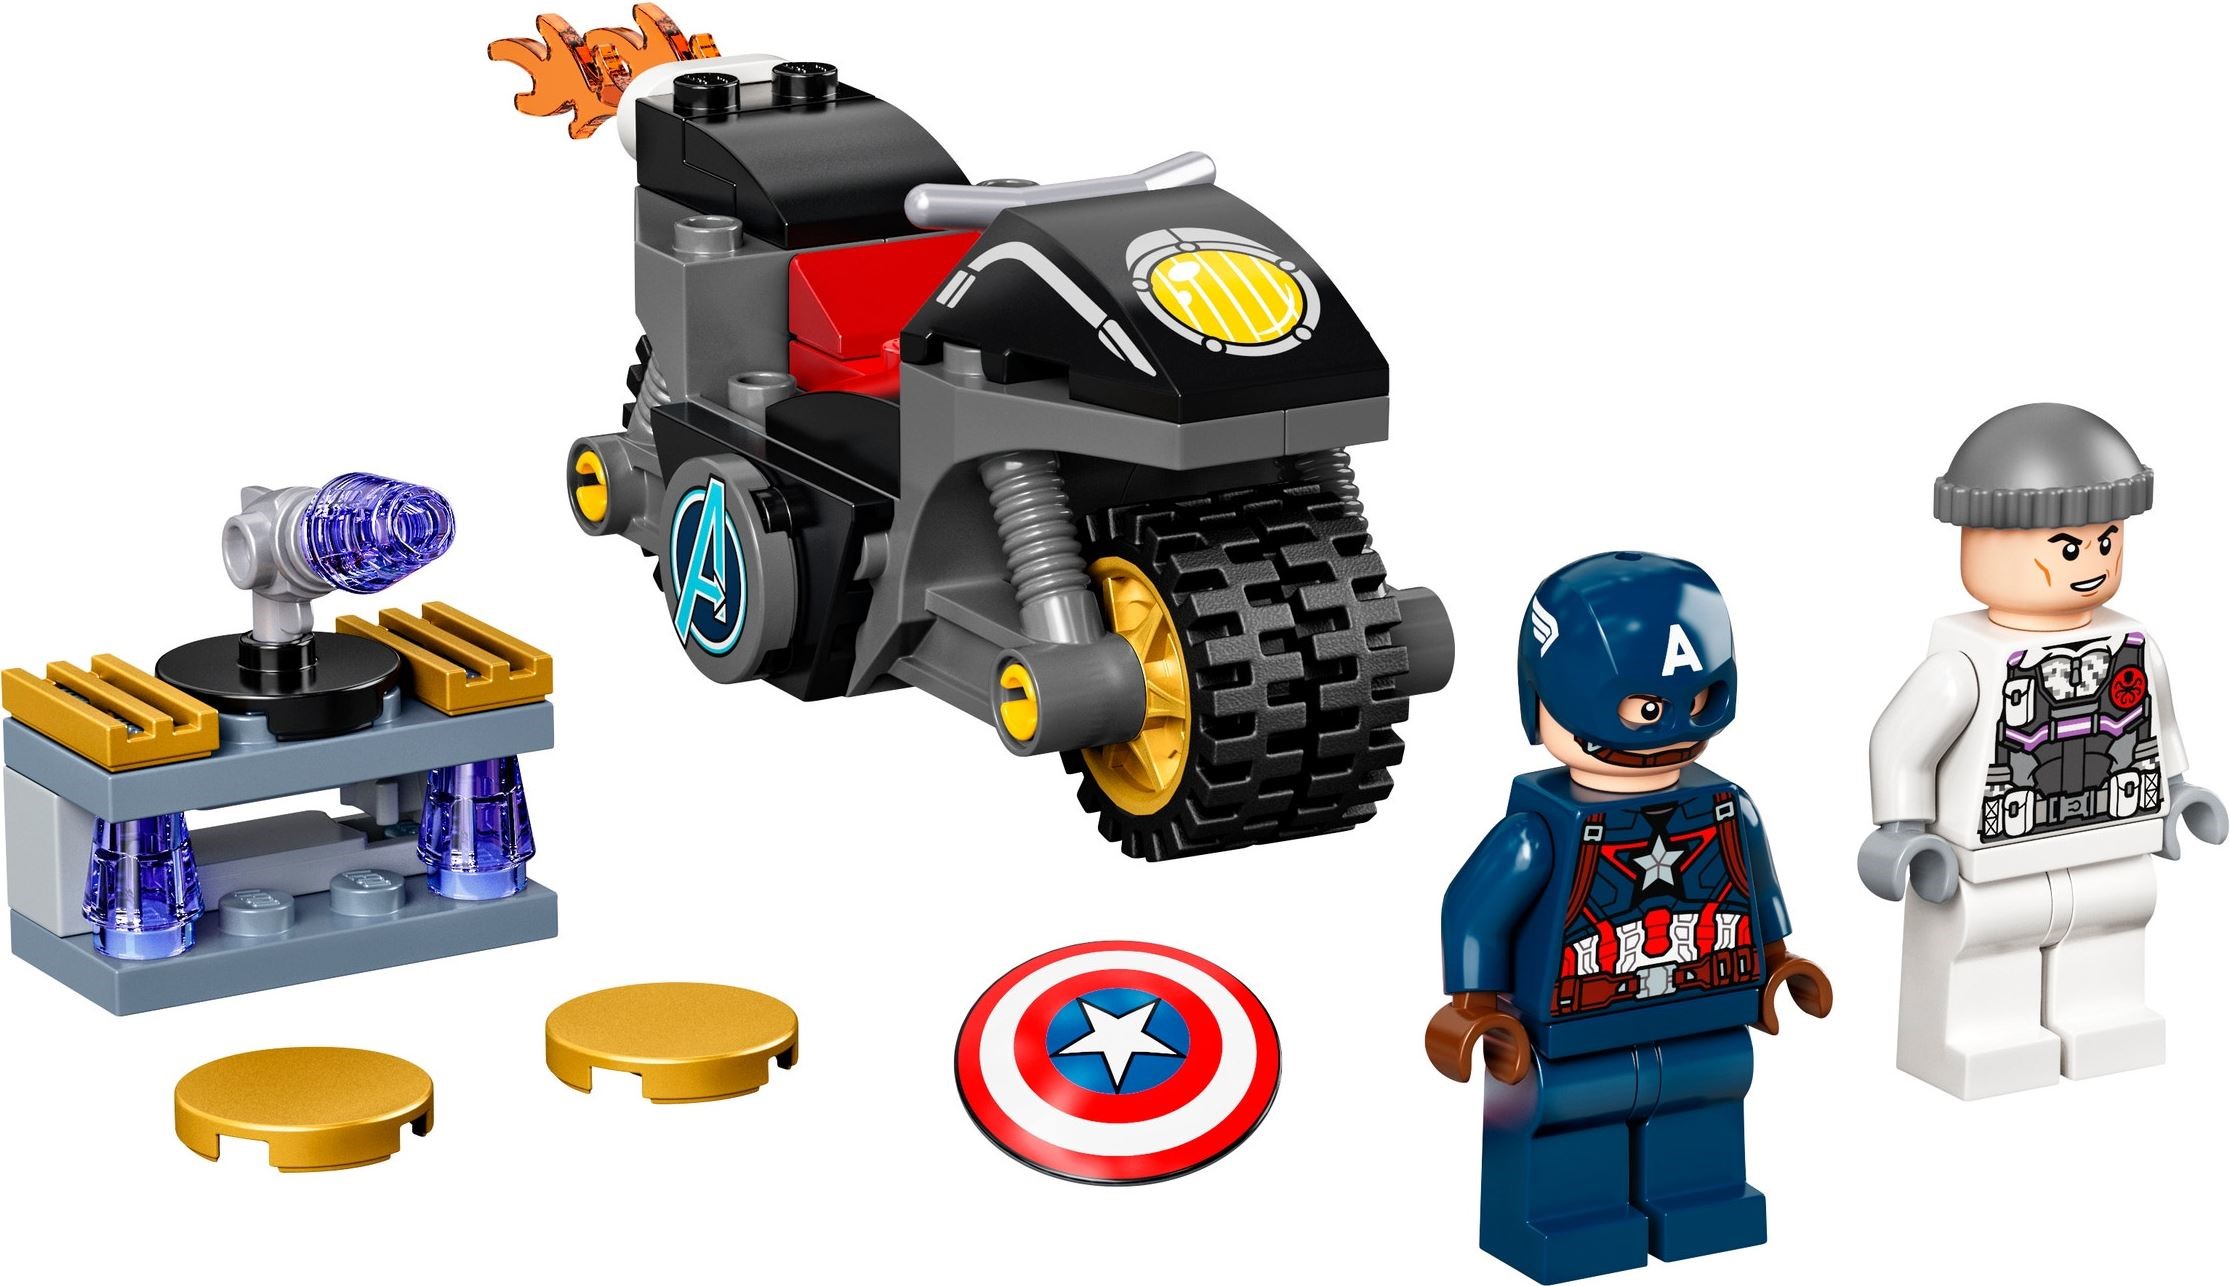 Nuevo Minifigura Lego oficial-Capitan America-sh686 76168 